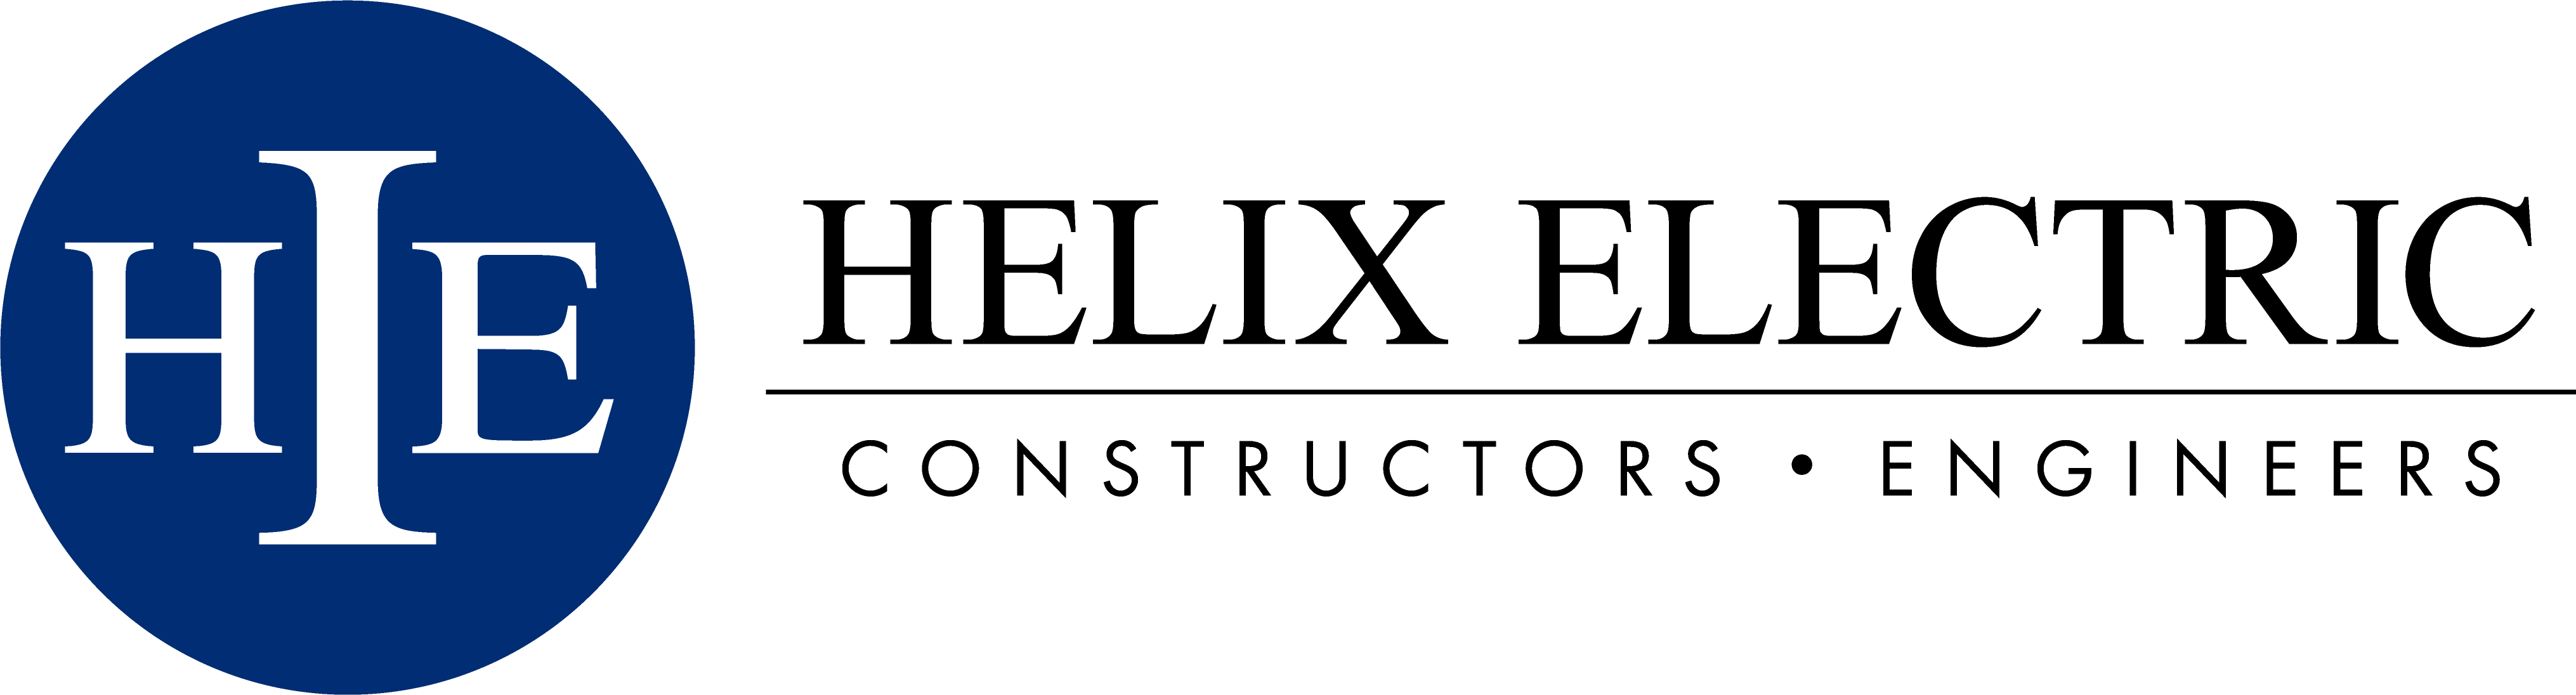 Helix Electric Company Logo